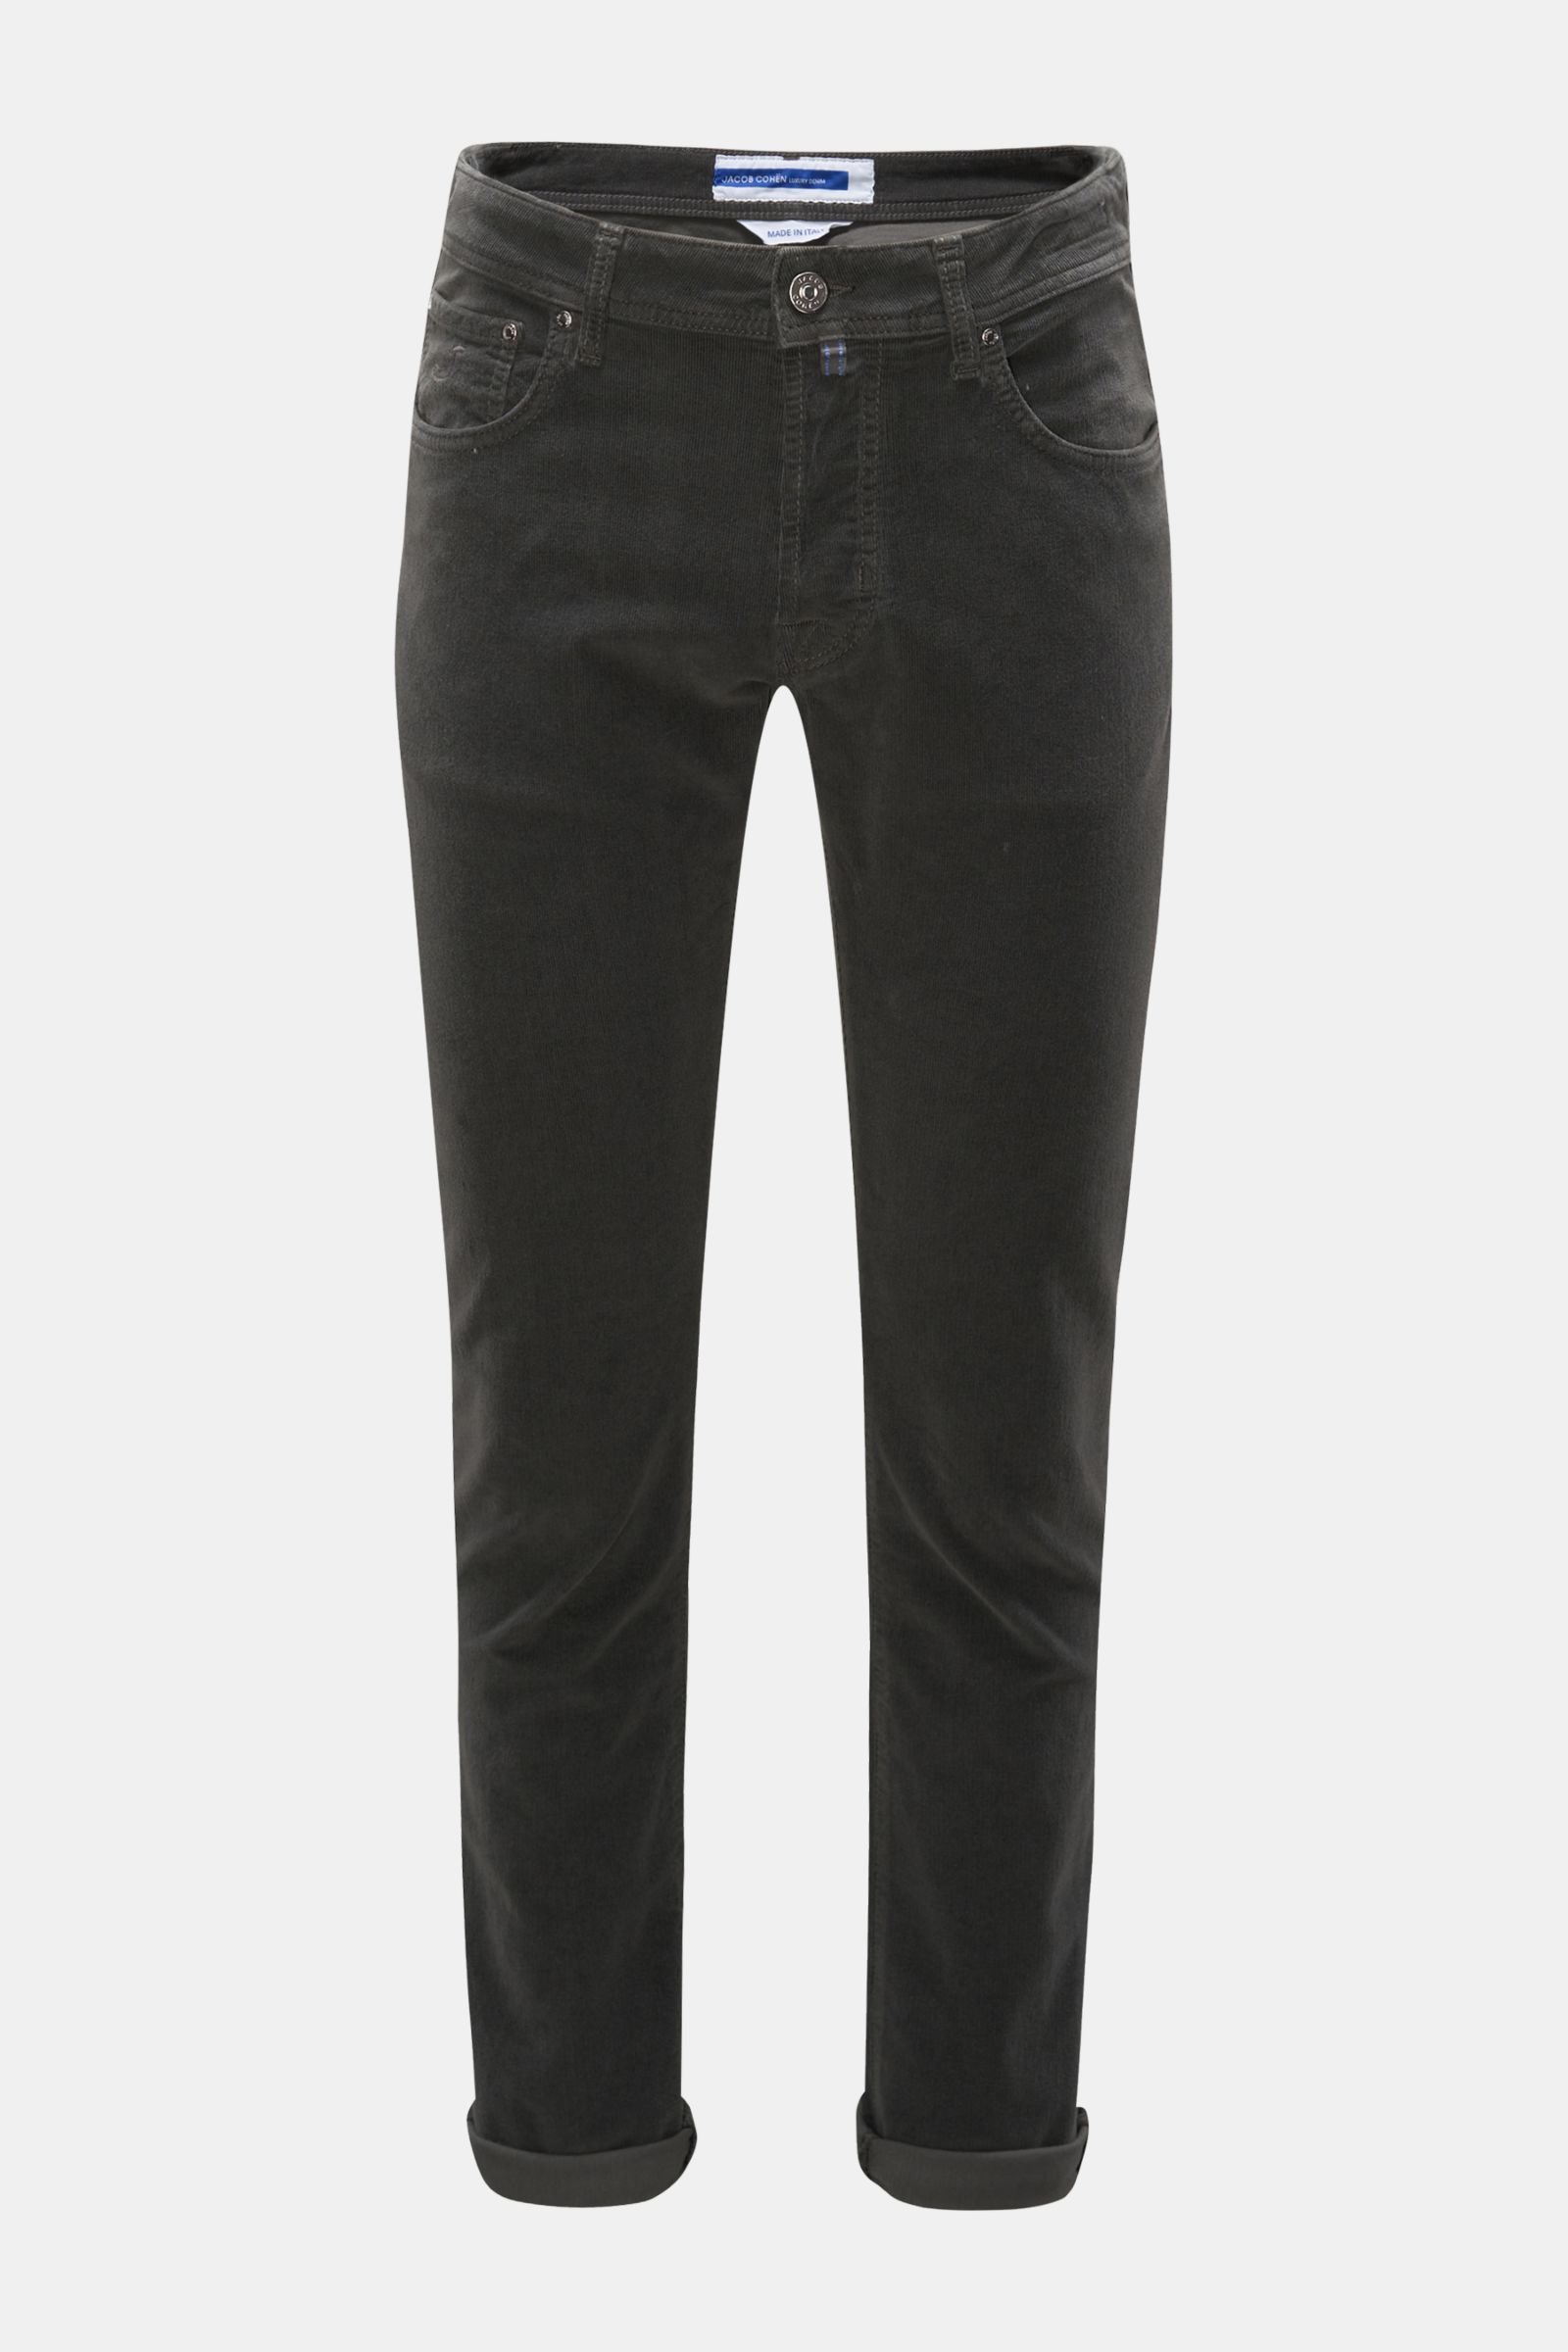 Corduroy trousers 'Bard' dark grey (formerly J688)